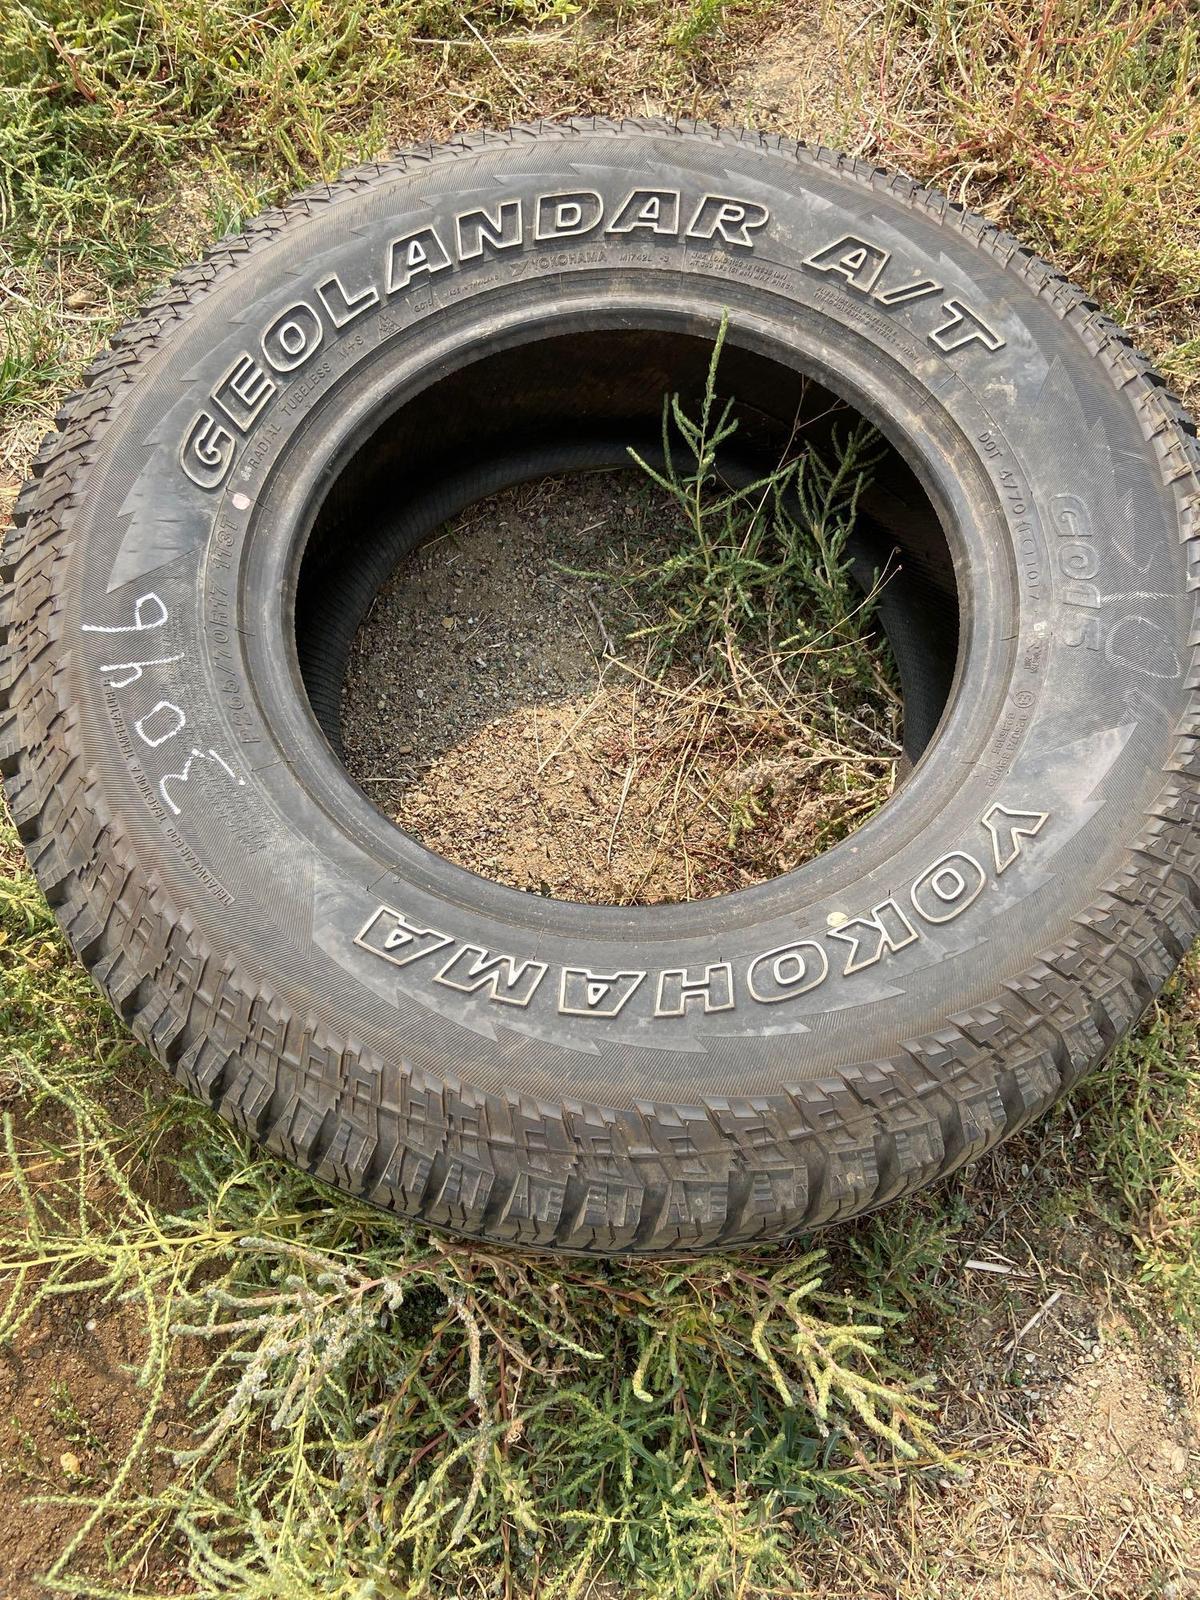 Single P265/70R 17 tire